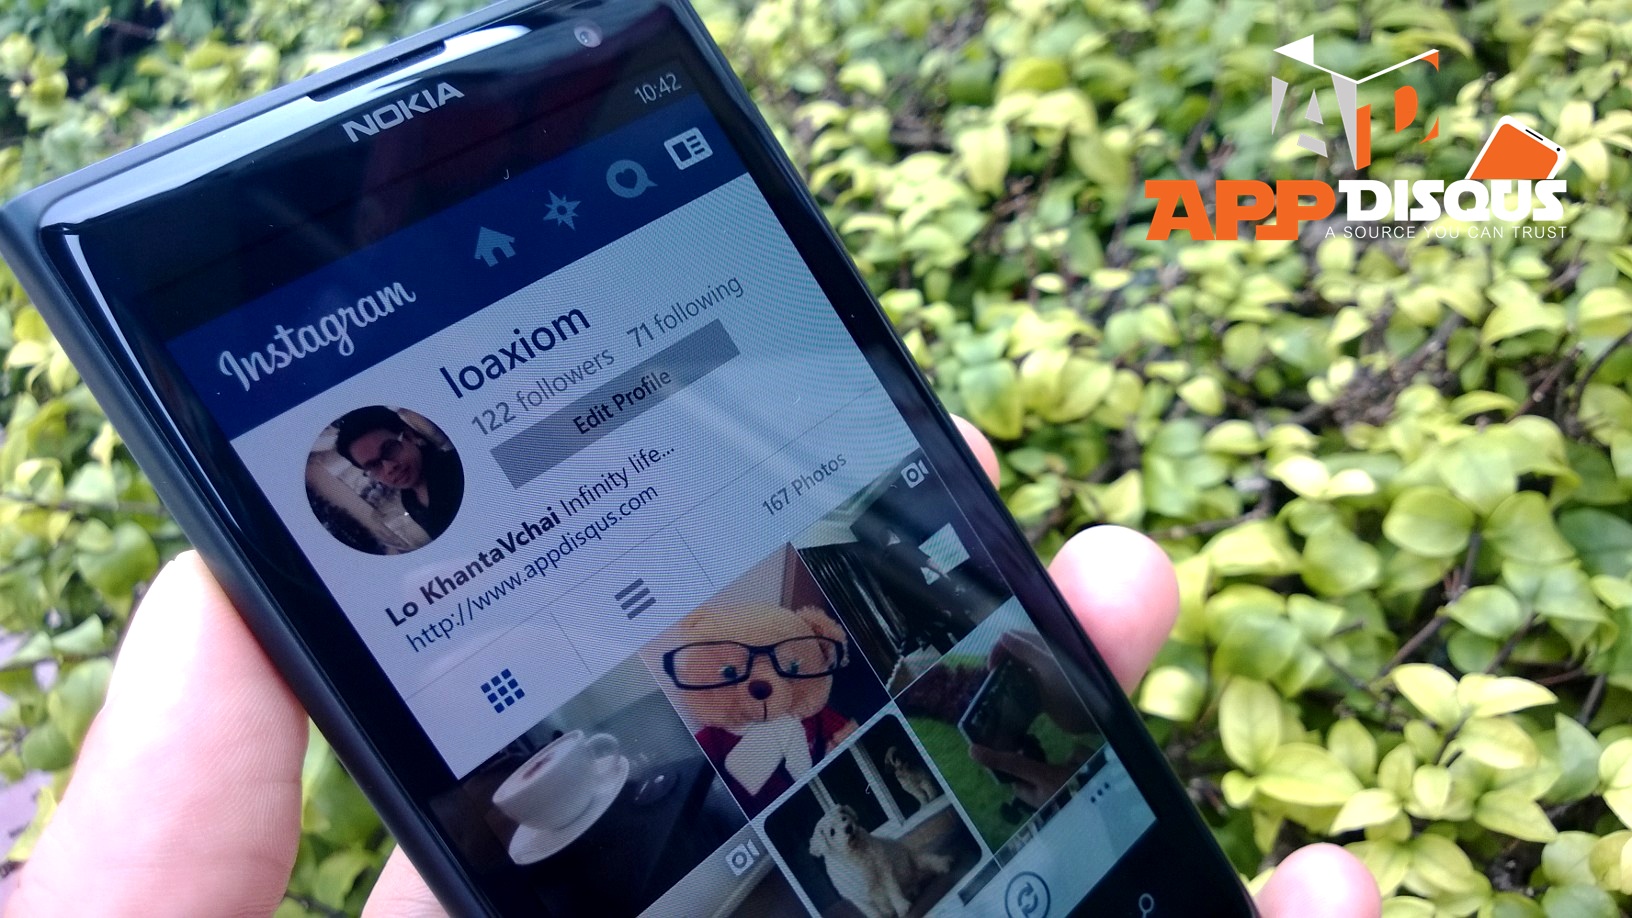 instagram for wp | instagram | [รีวิวแอพ] วิธีสมัครและใช้งาน Instagram (Beta) สำหรับ Windows Phone: มันคือความสมบูรณ์แบบ แต่ทำไมถูกเรียกว่า “Beta”